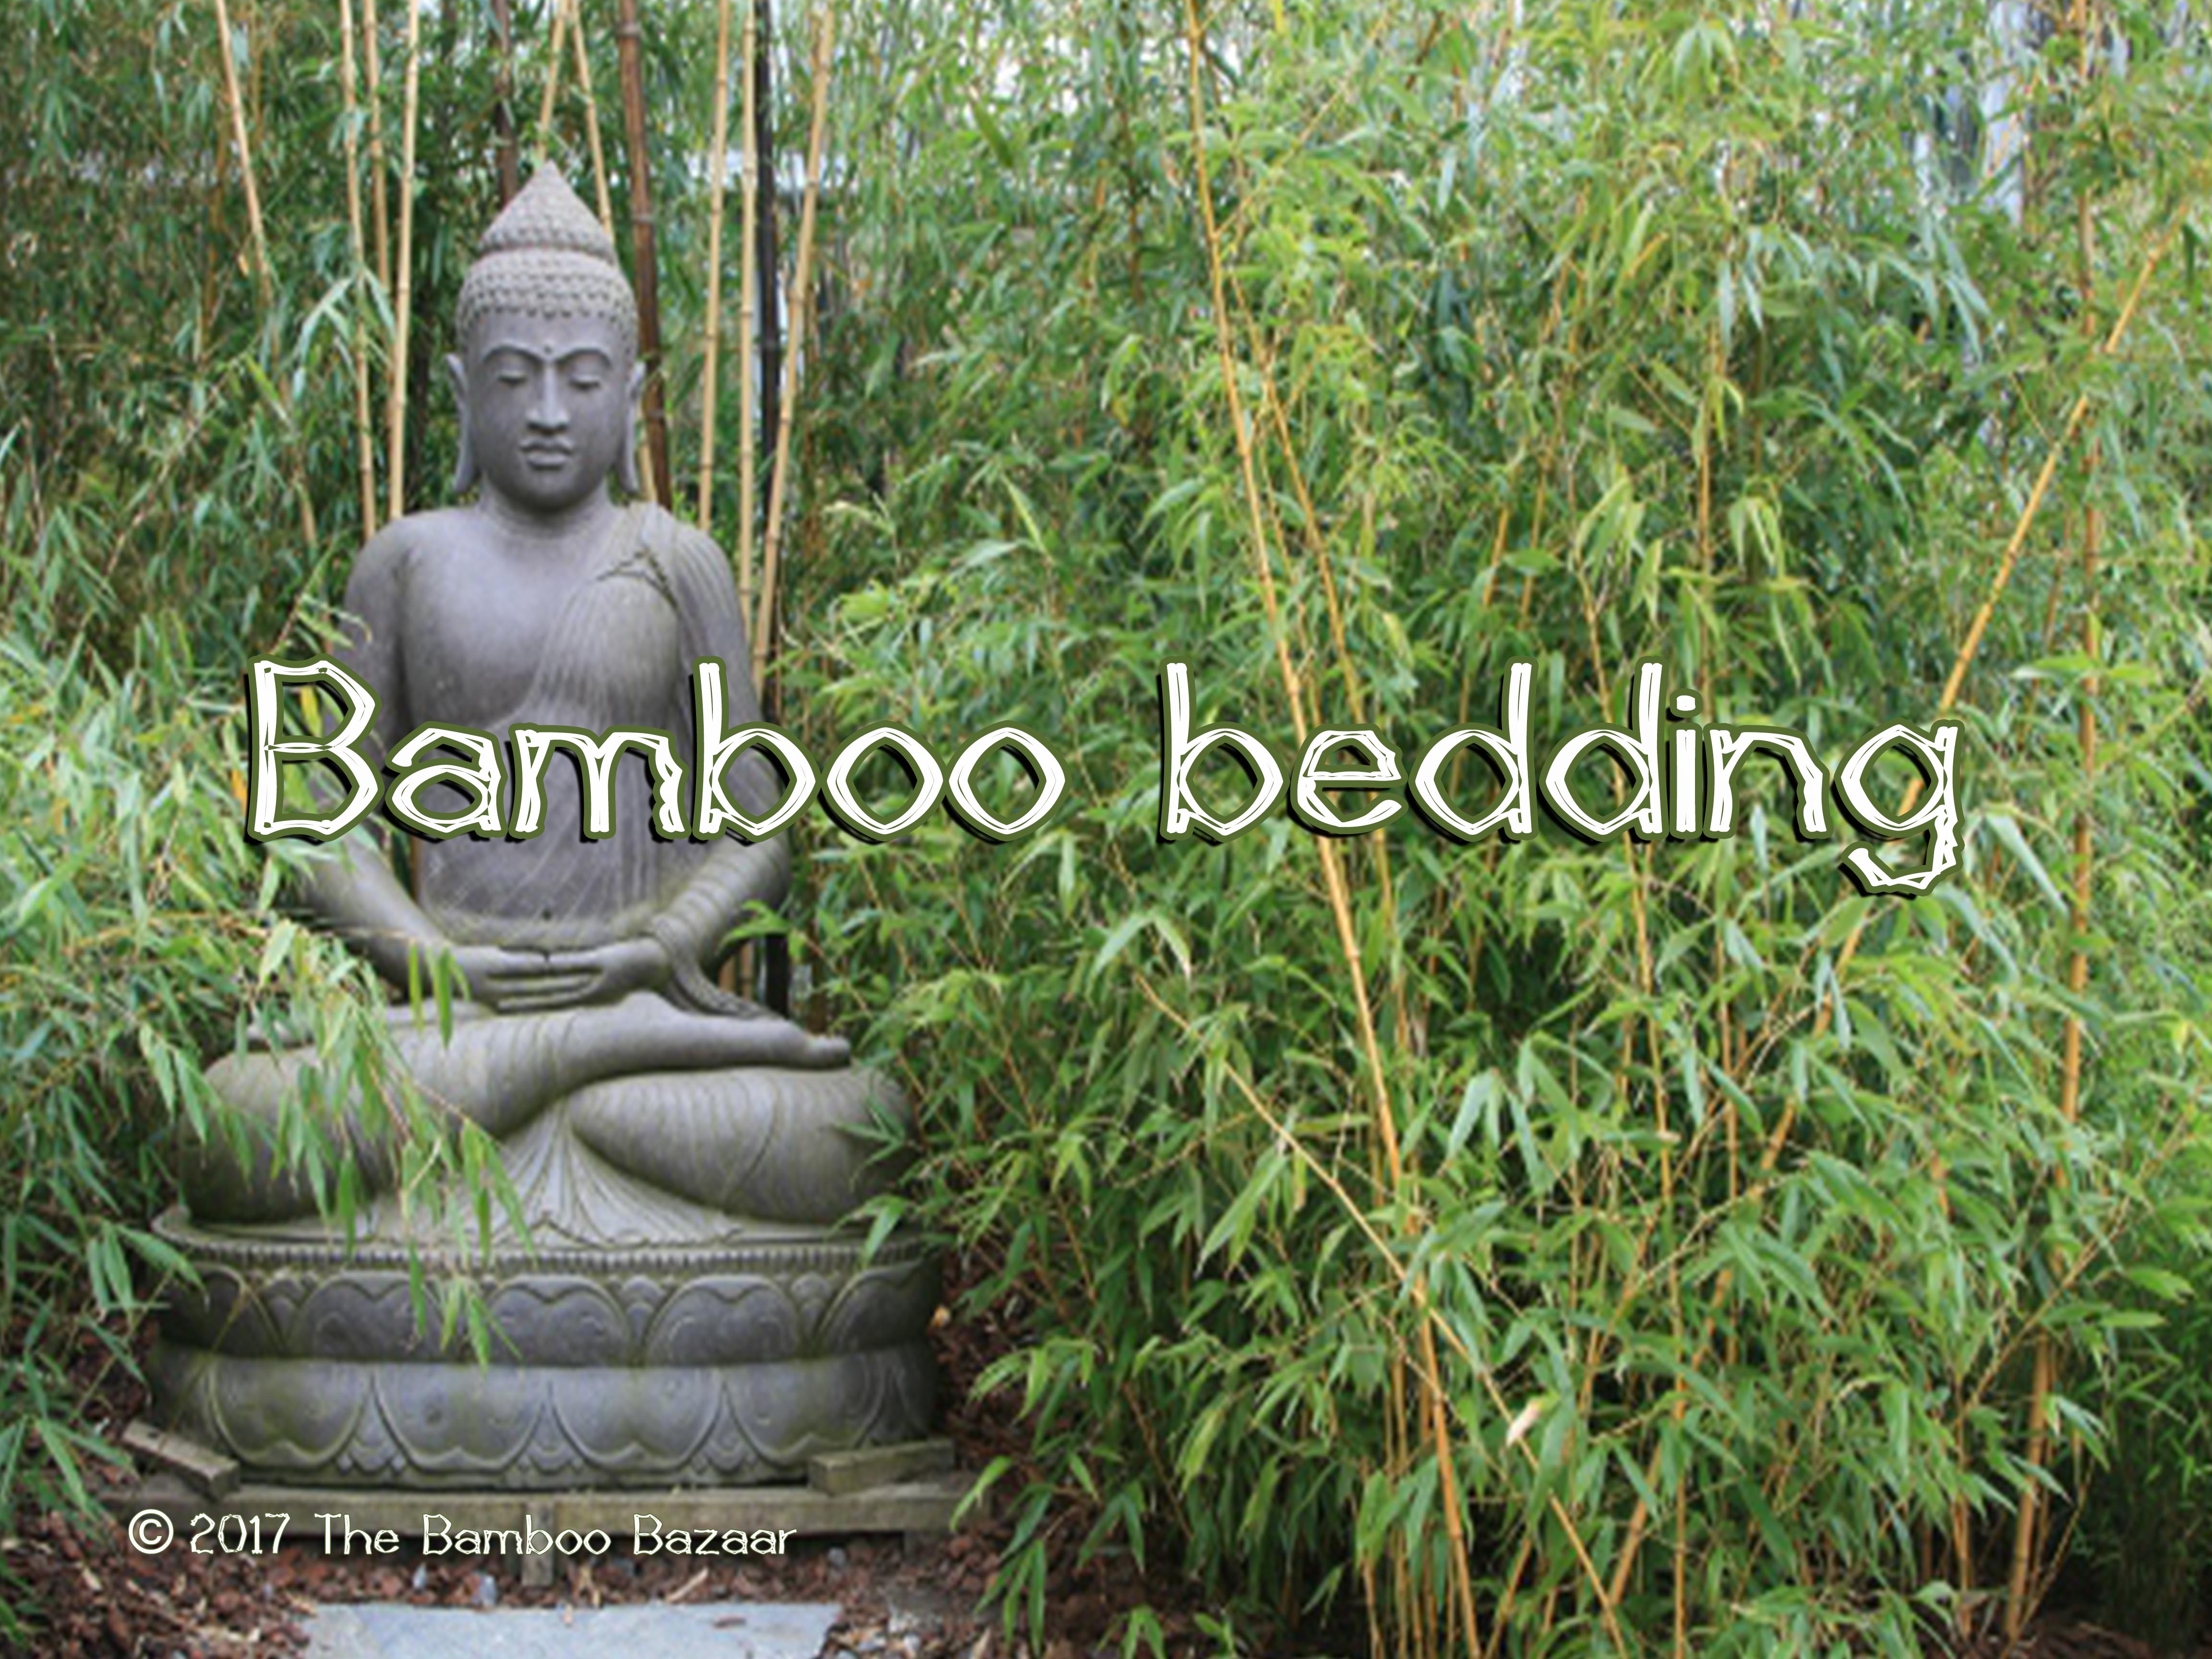 Bamboo bedding